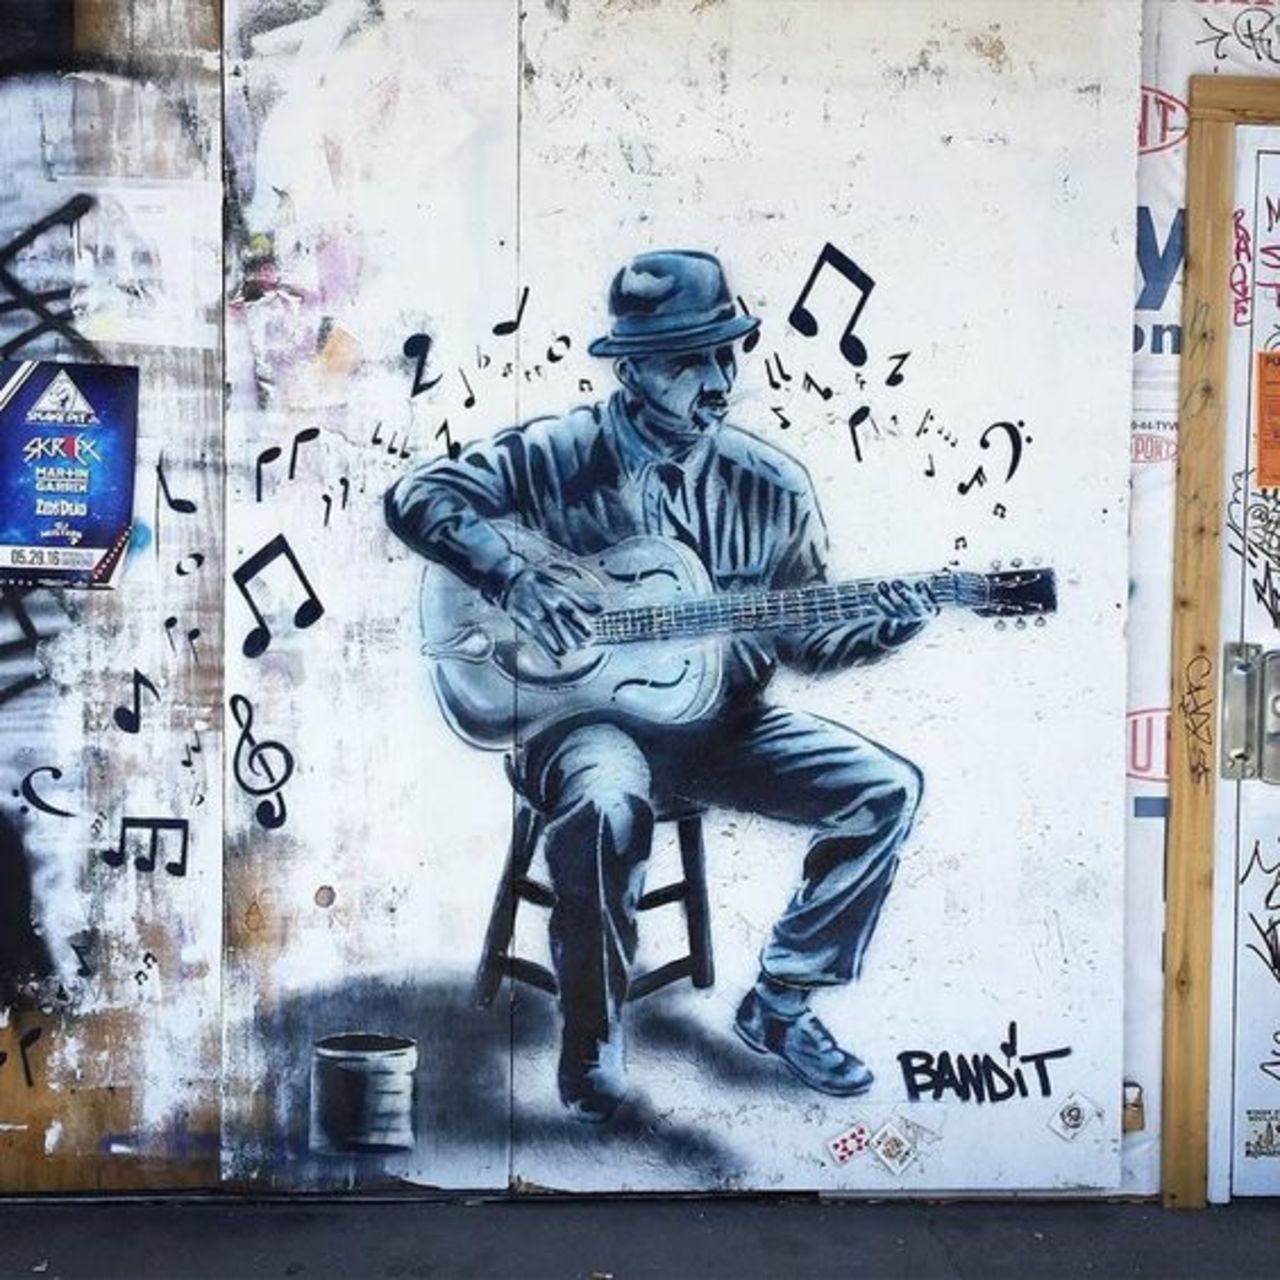 ... muisc is all around. Art by Bandit in Chicago #StreetArt #Art #Music #guitar #Graffiti #Mural #UrbanArt #Chicago https://t.co/FrMHbRKGVO